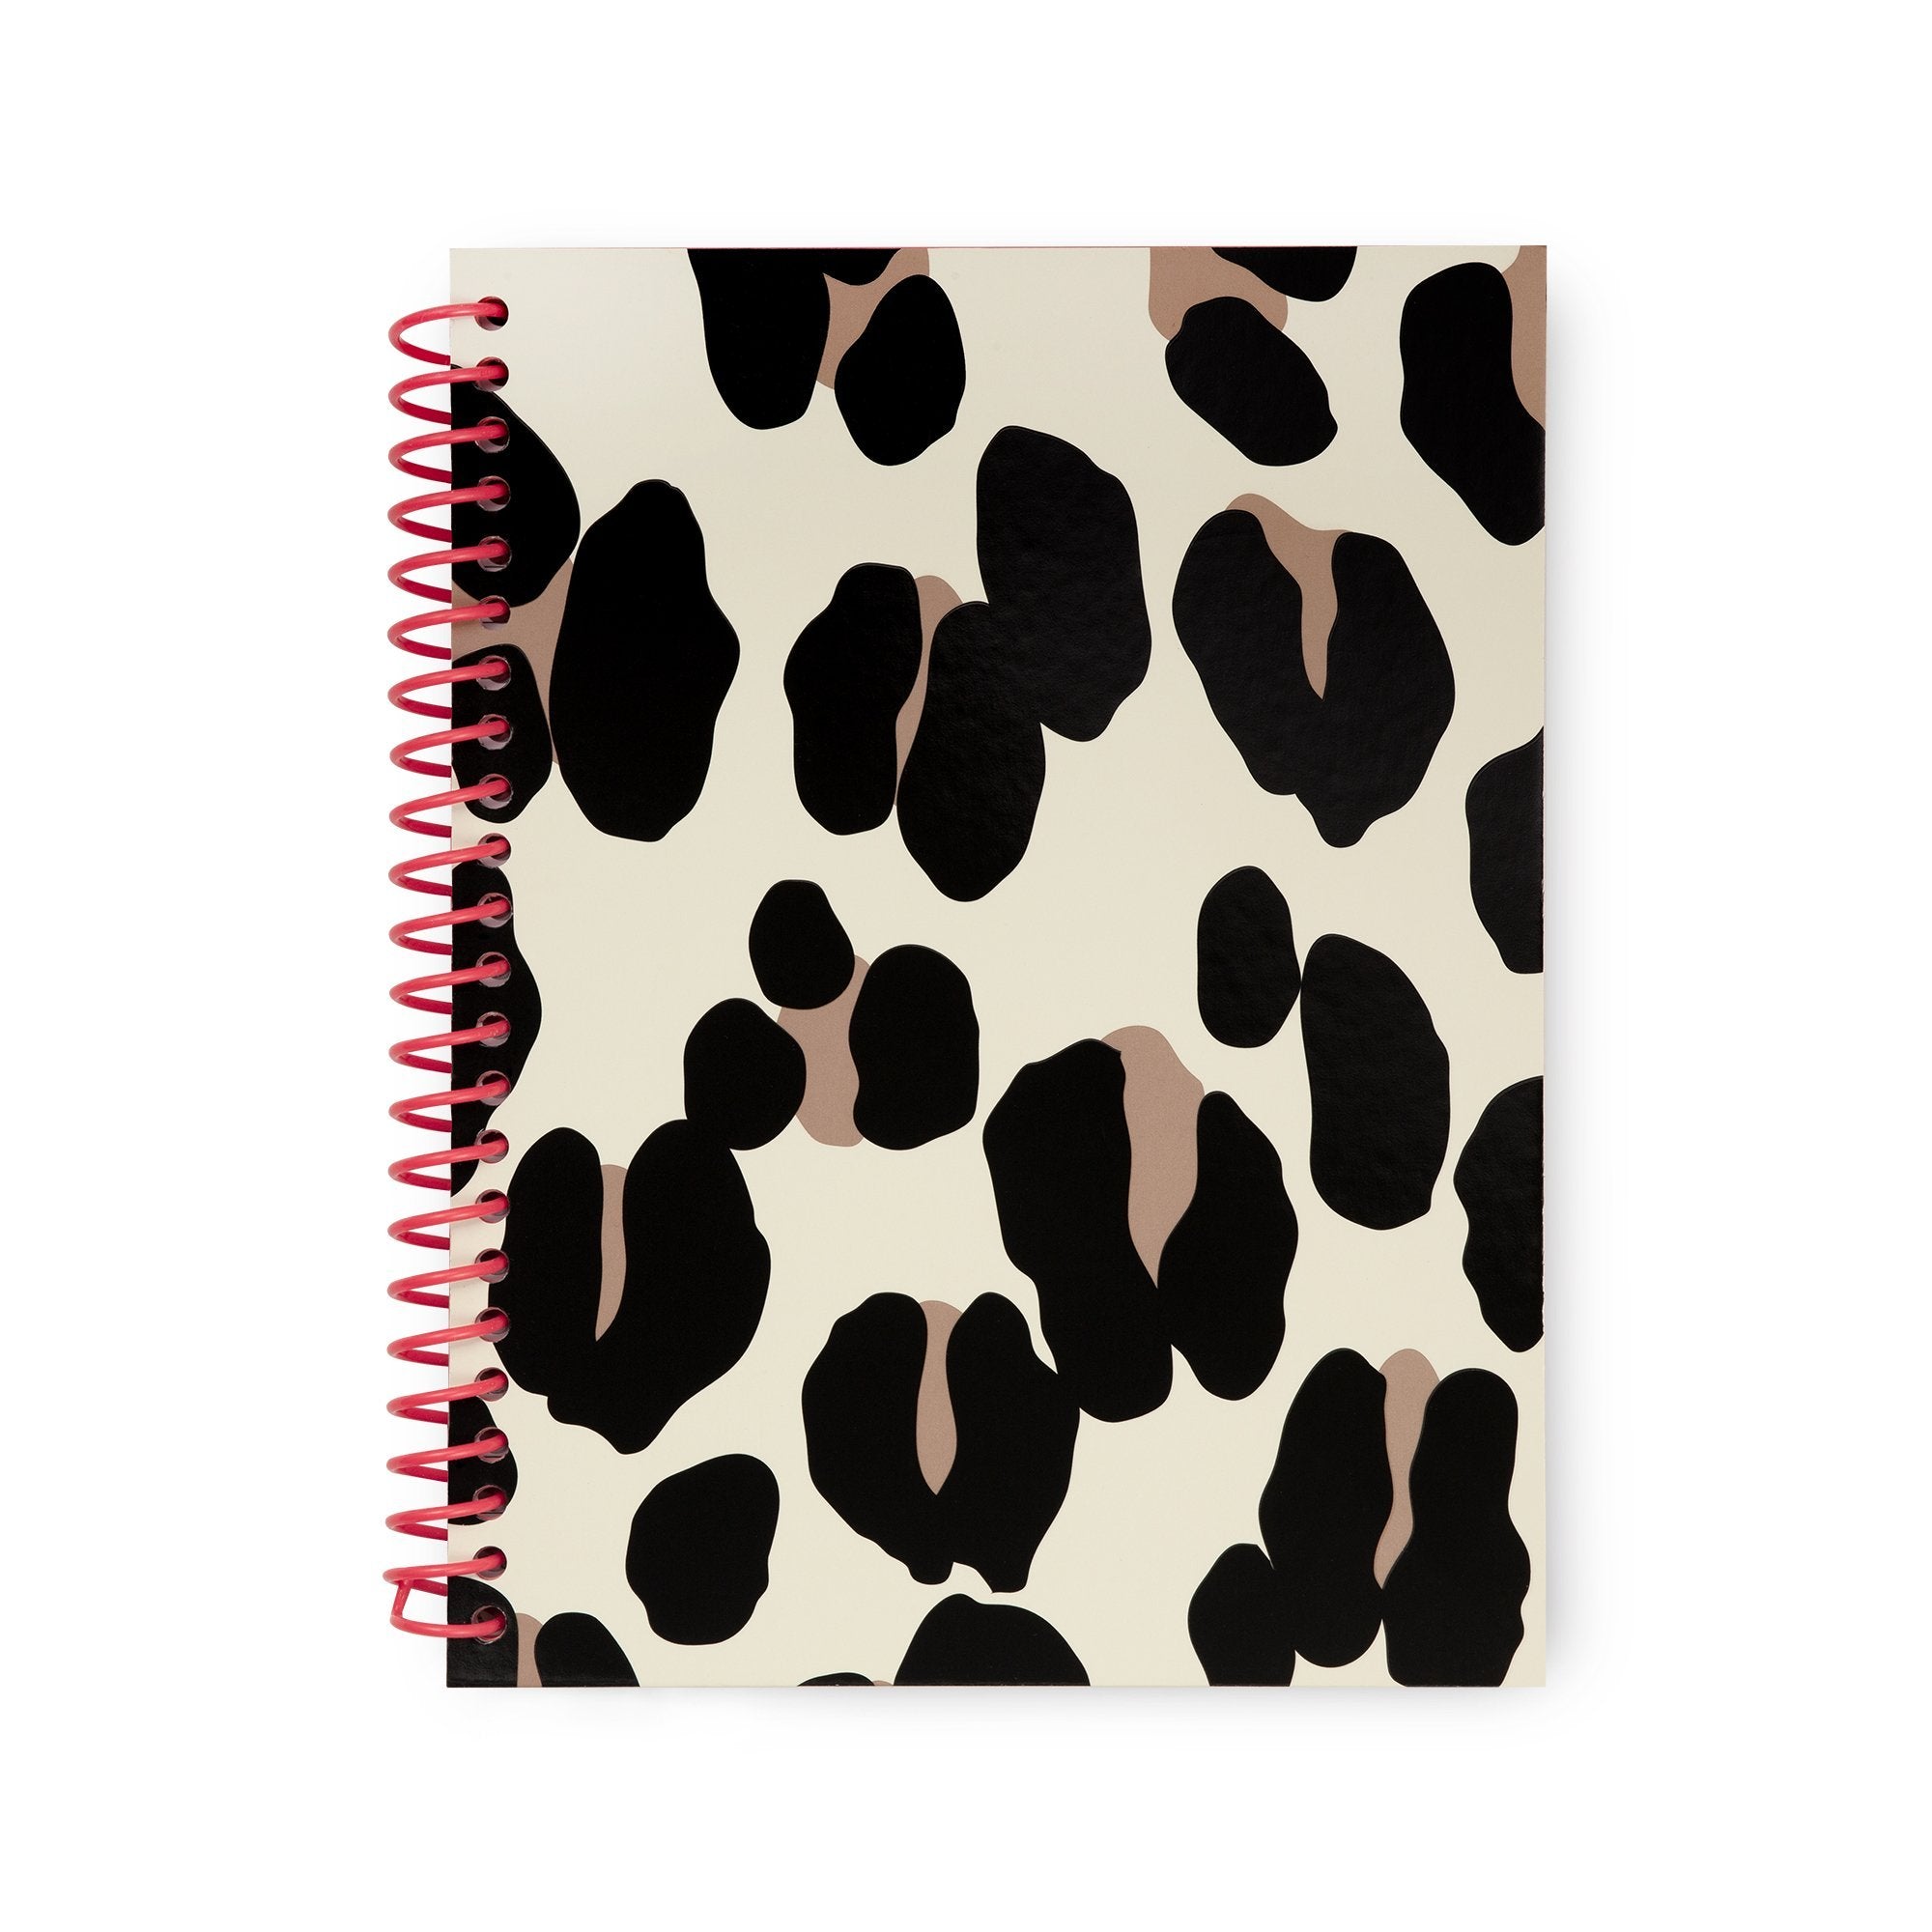 Kate Spade New York Spiral Notebook (Small), Forest Feline - Lifeguard Press